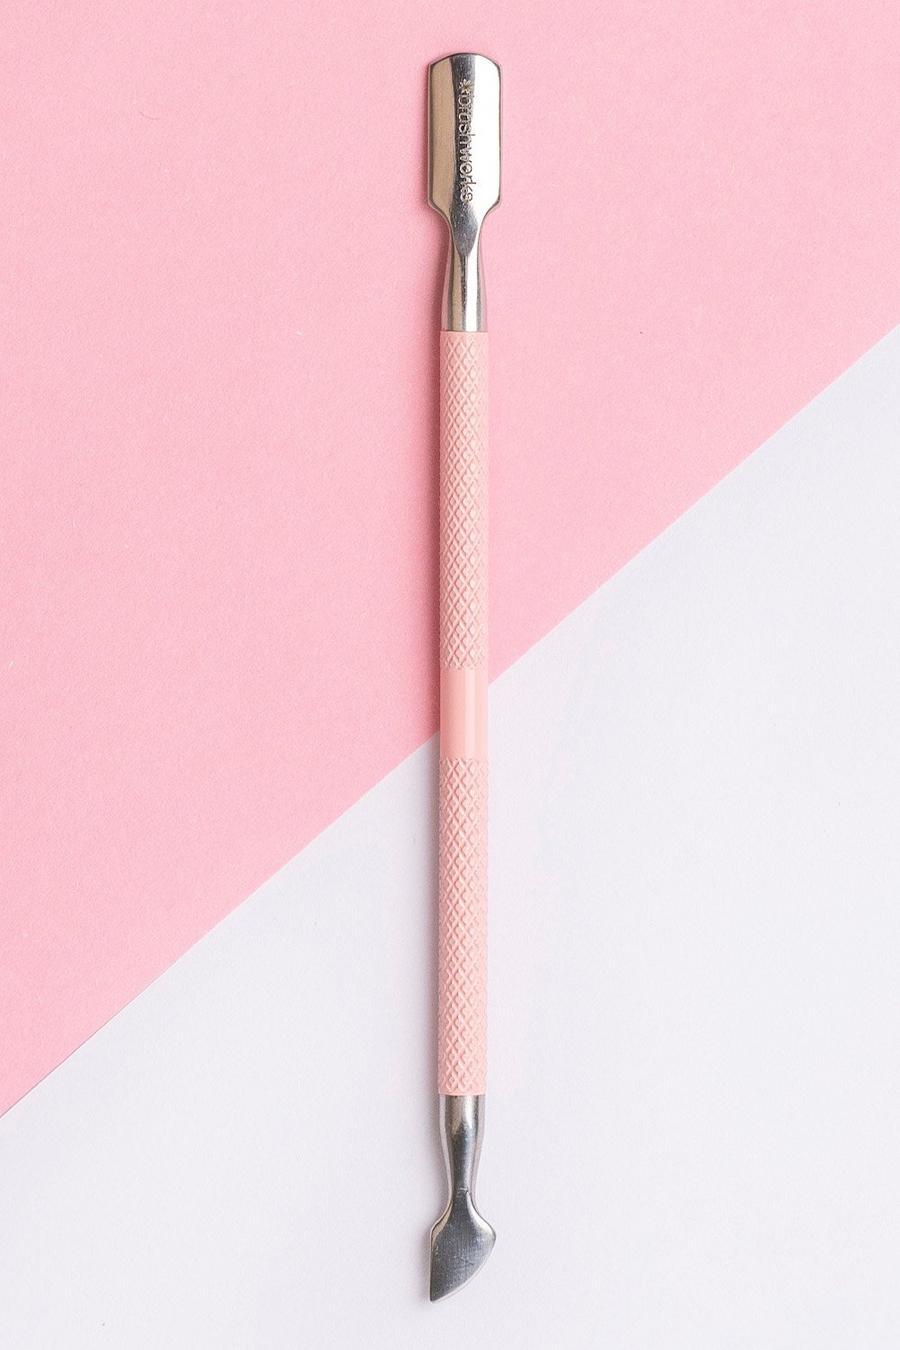 Brushworks Nagelhaut-Pusher, Babyrosa pink